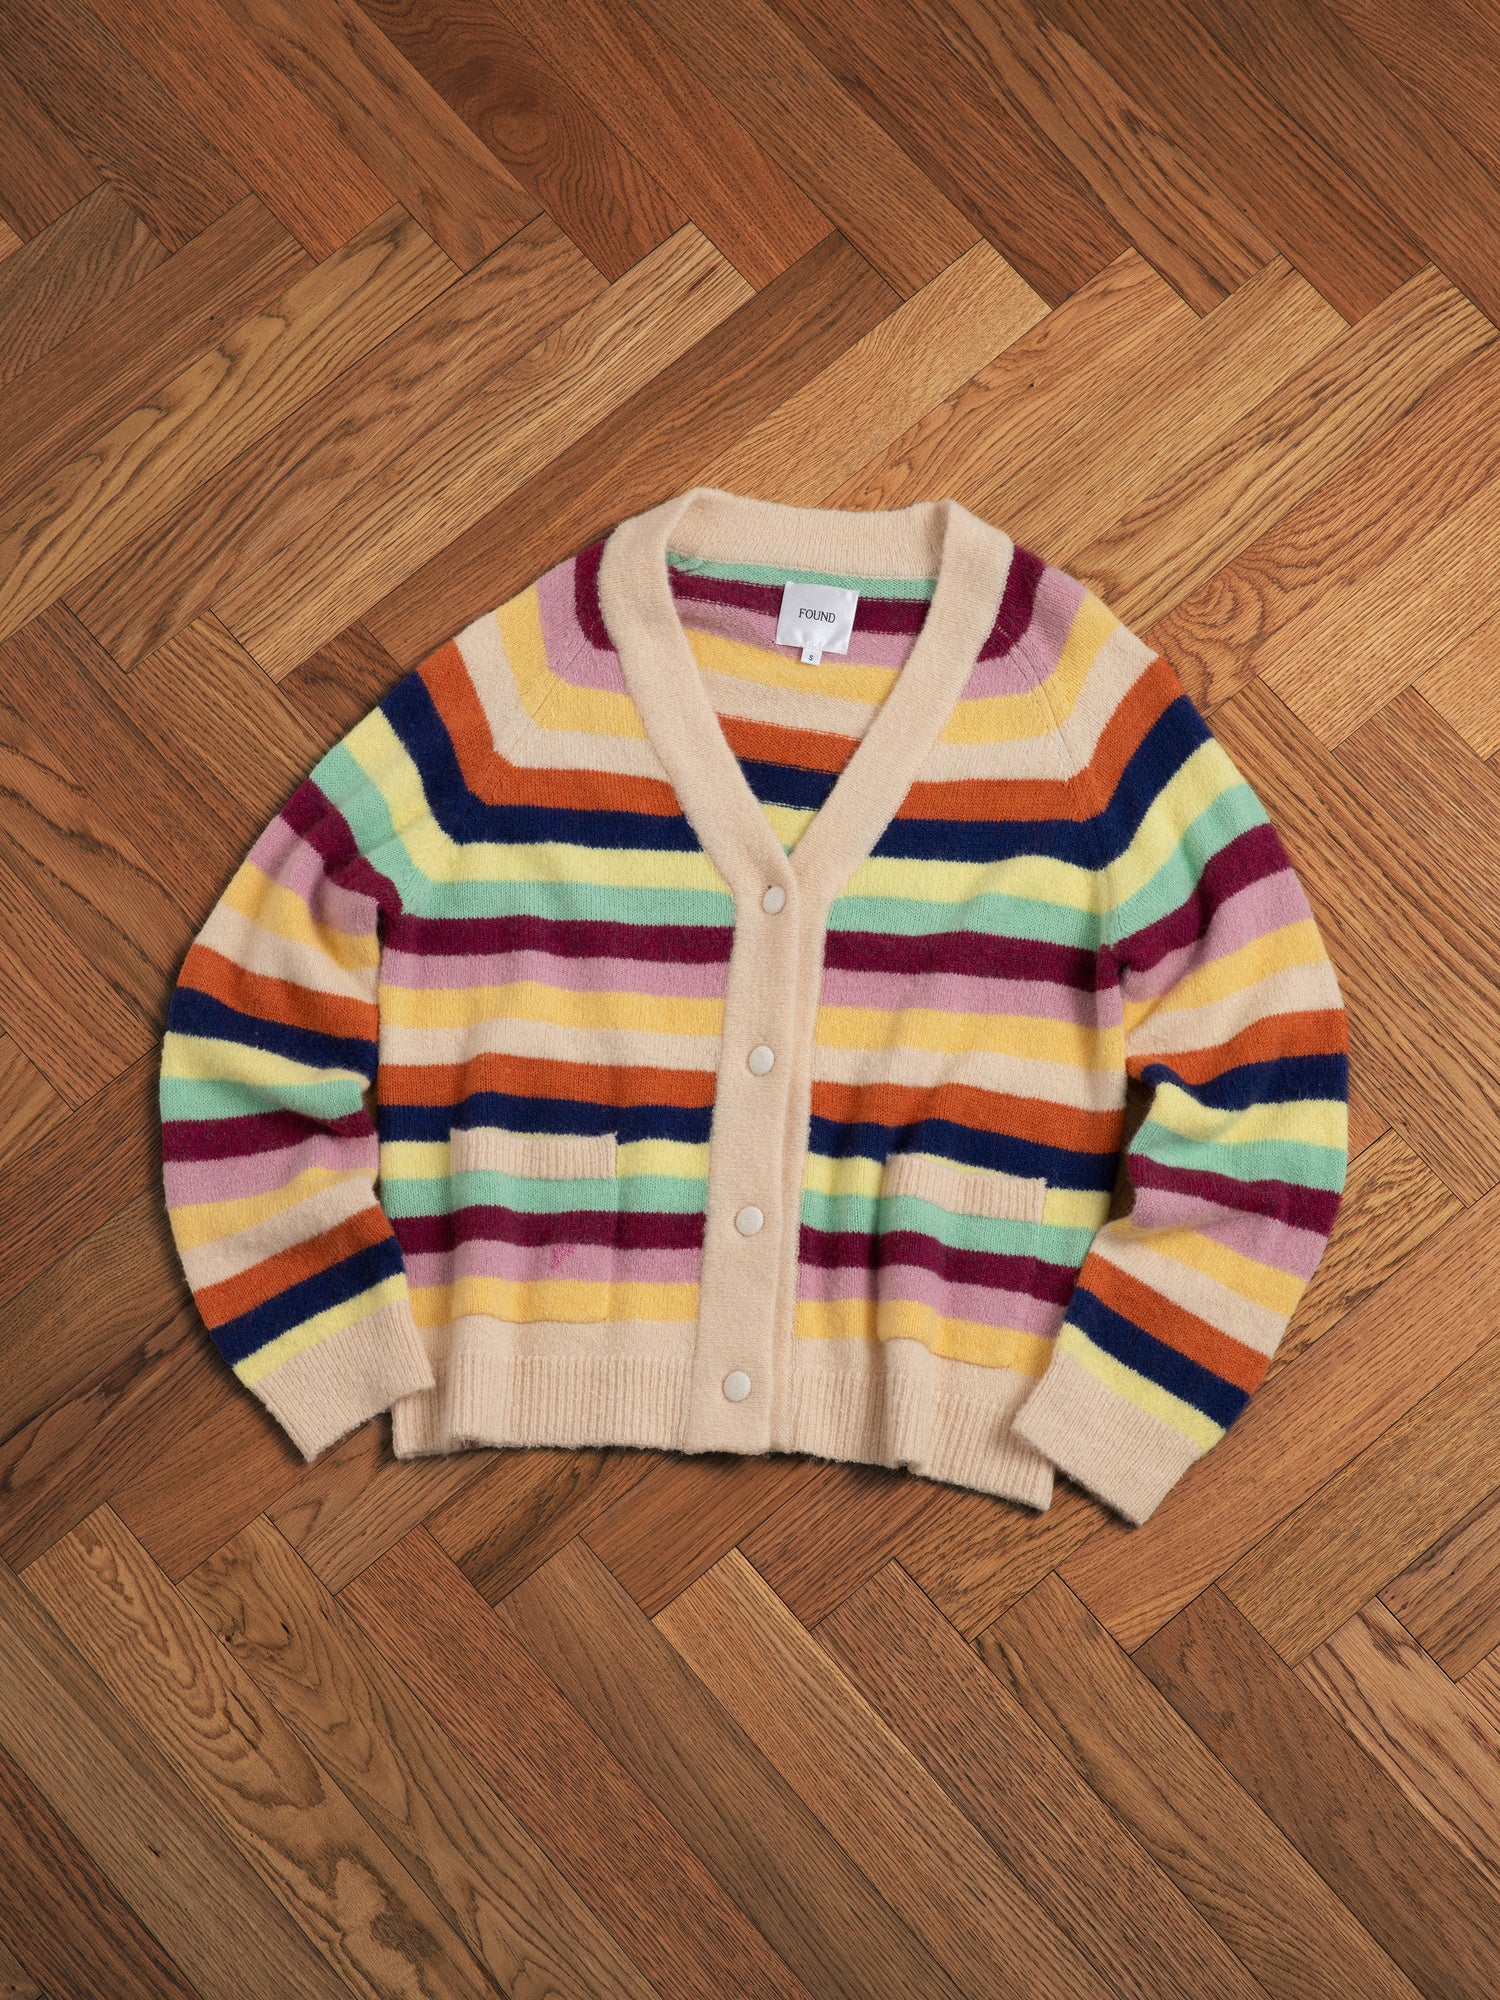 A vibrant hues Found Razi Multi Stripe Cardigan sitting on a wooden floor.